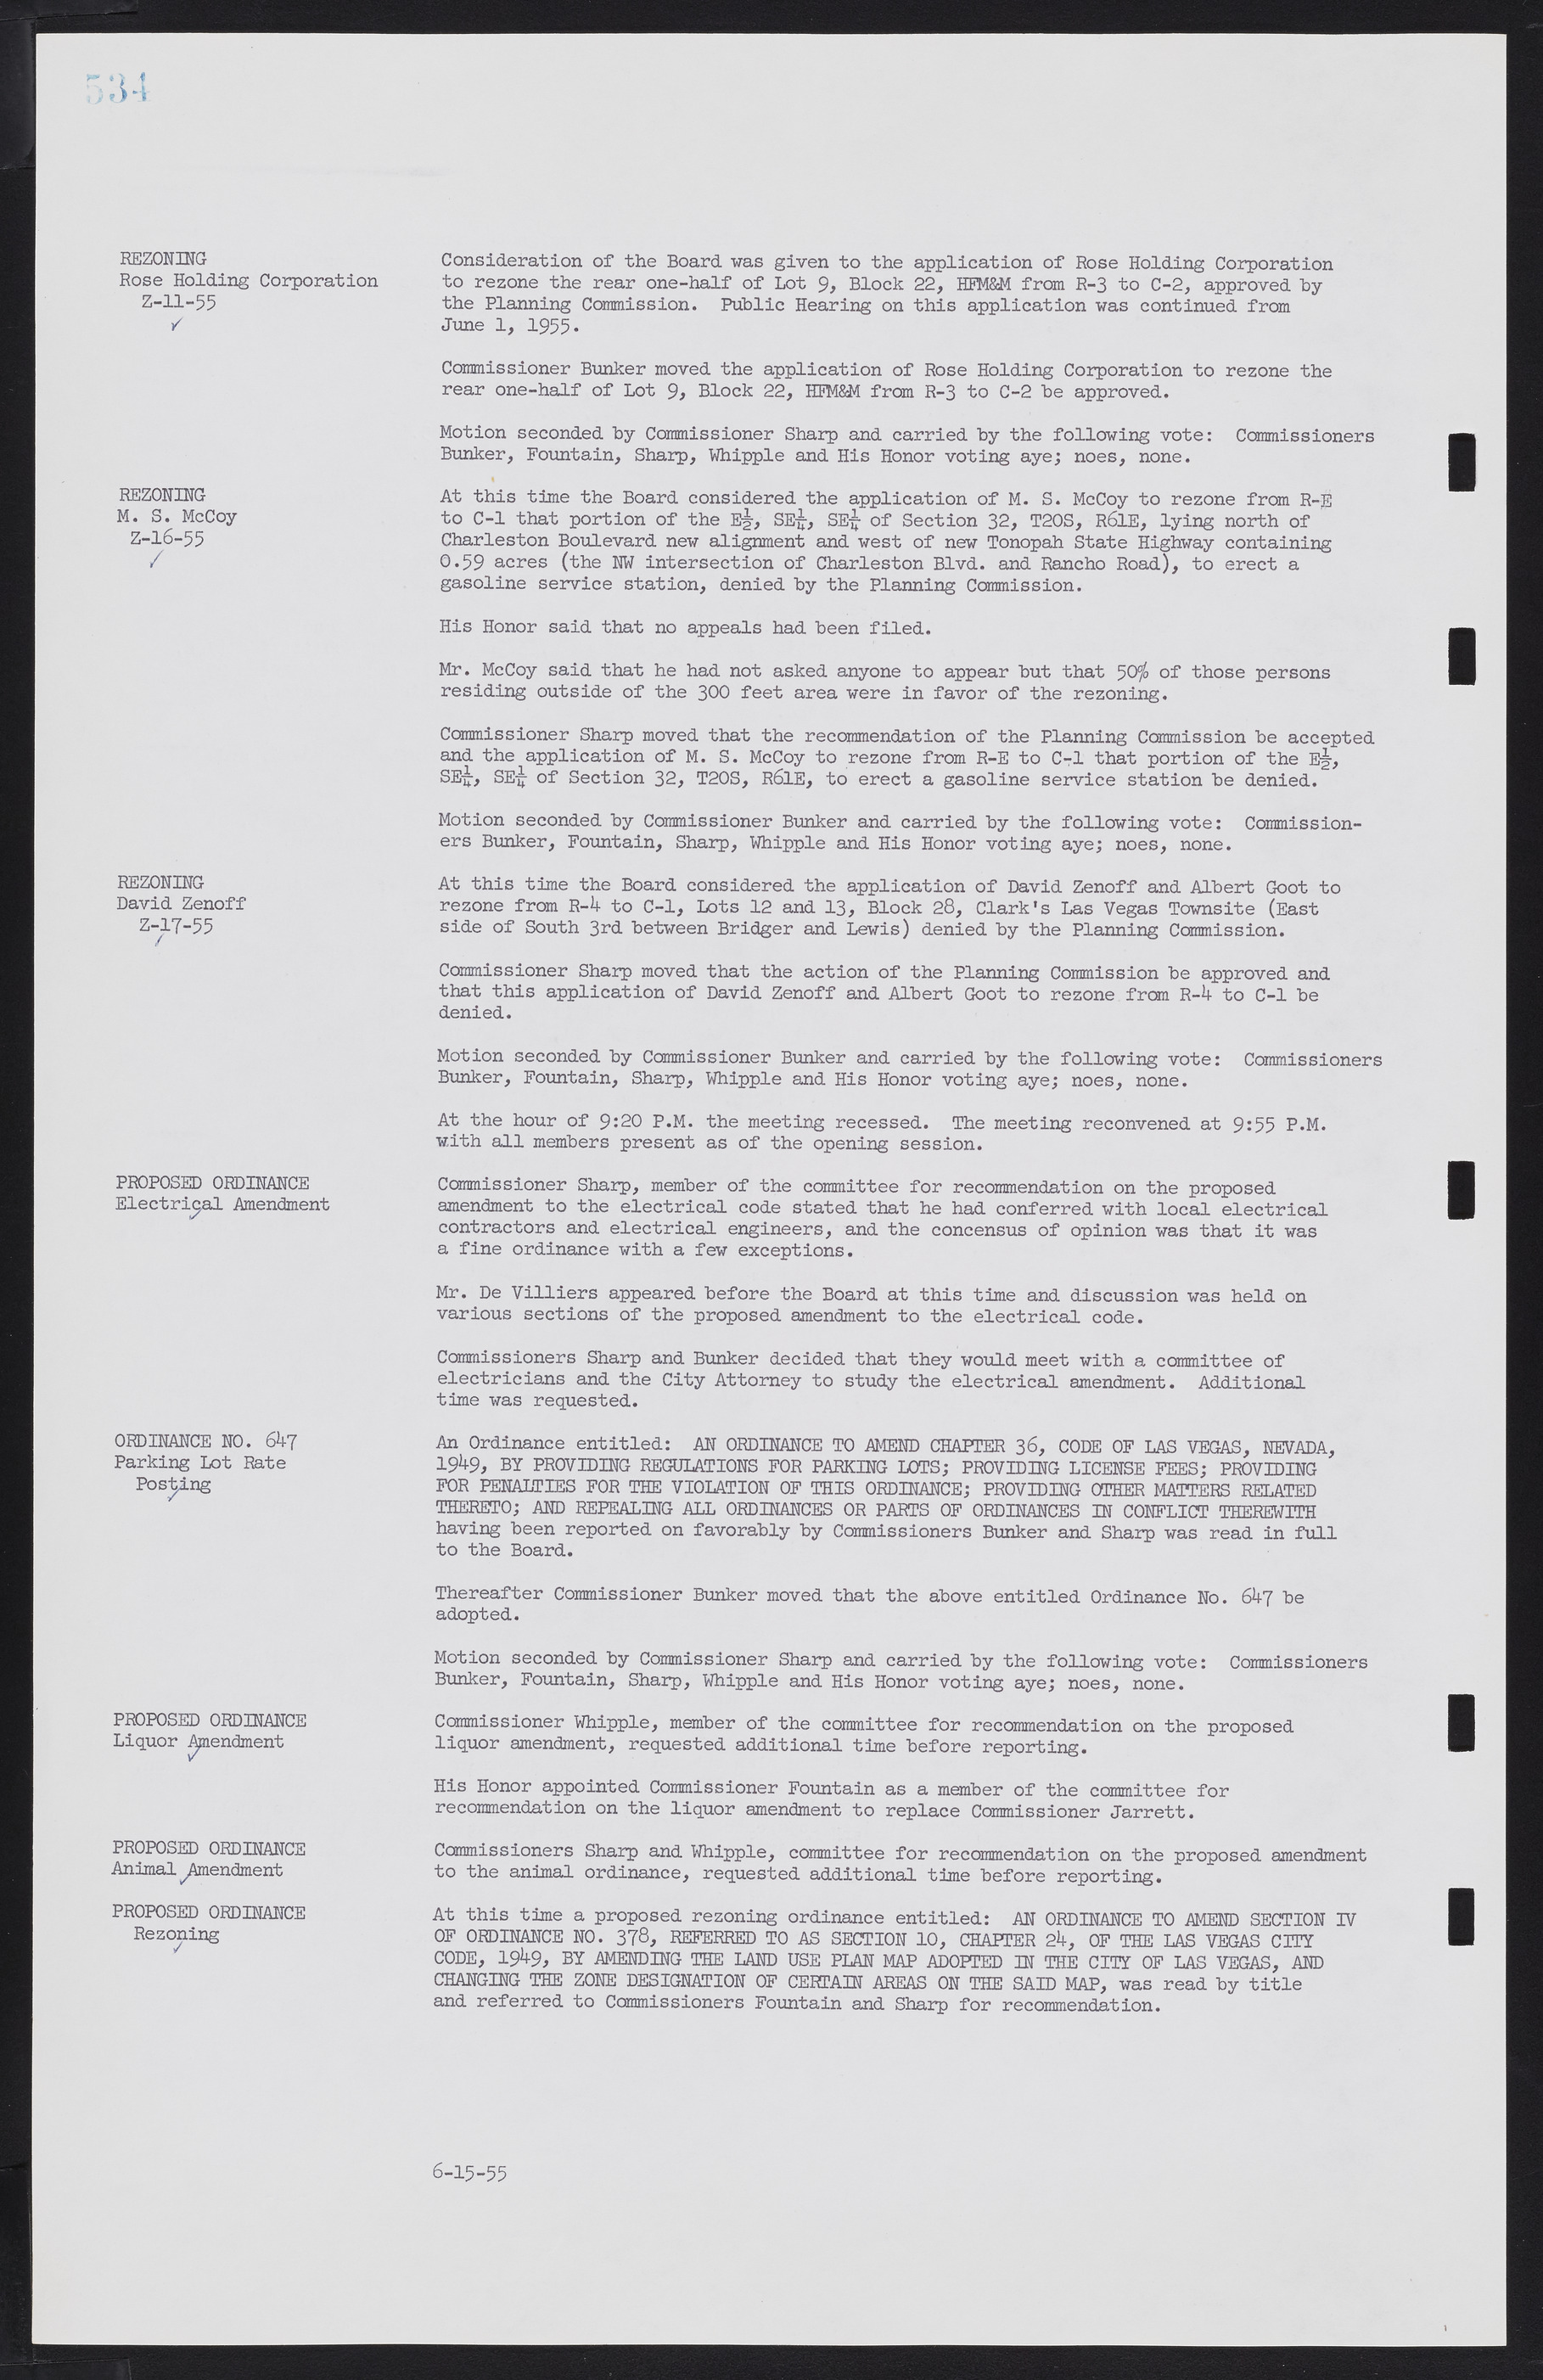 Las Vegas City Commission Minutes, February 17, 1954 to September 21, 1955, lvc000009-540